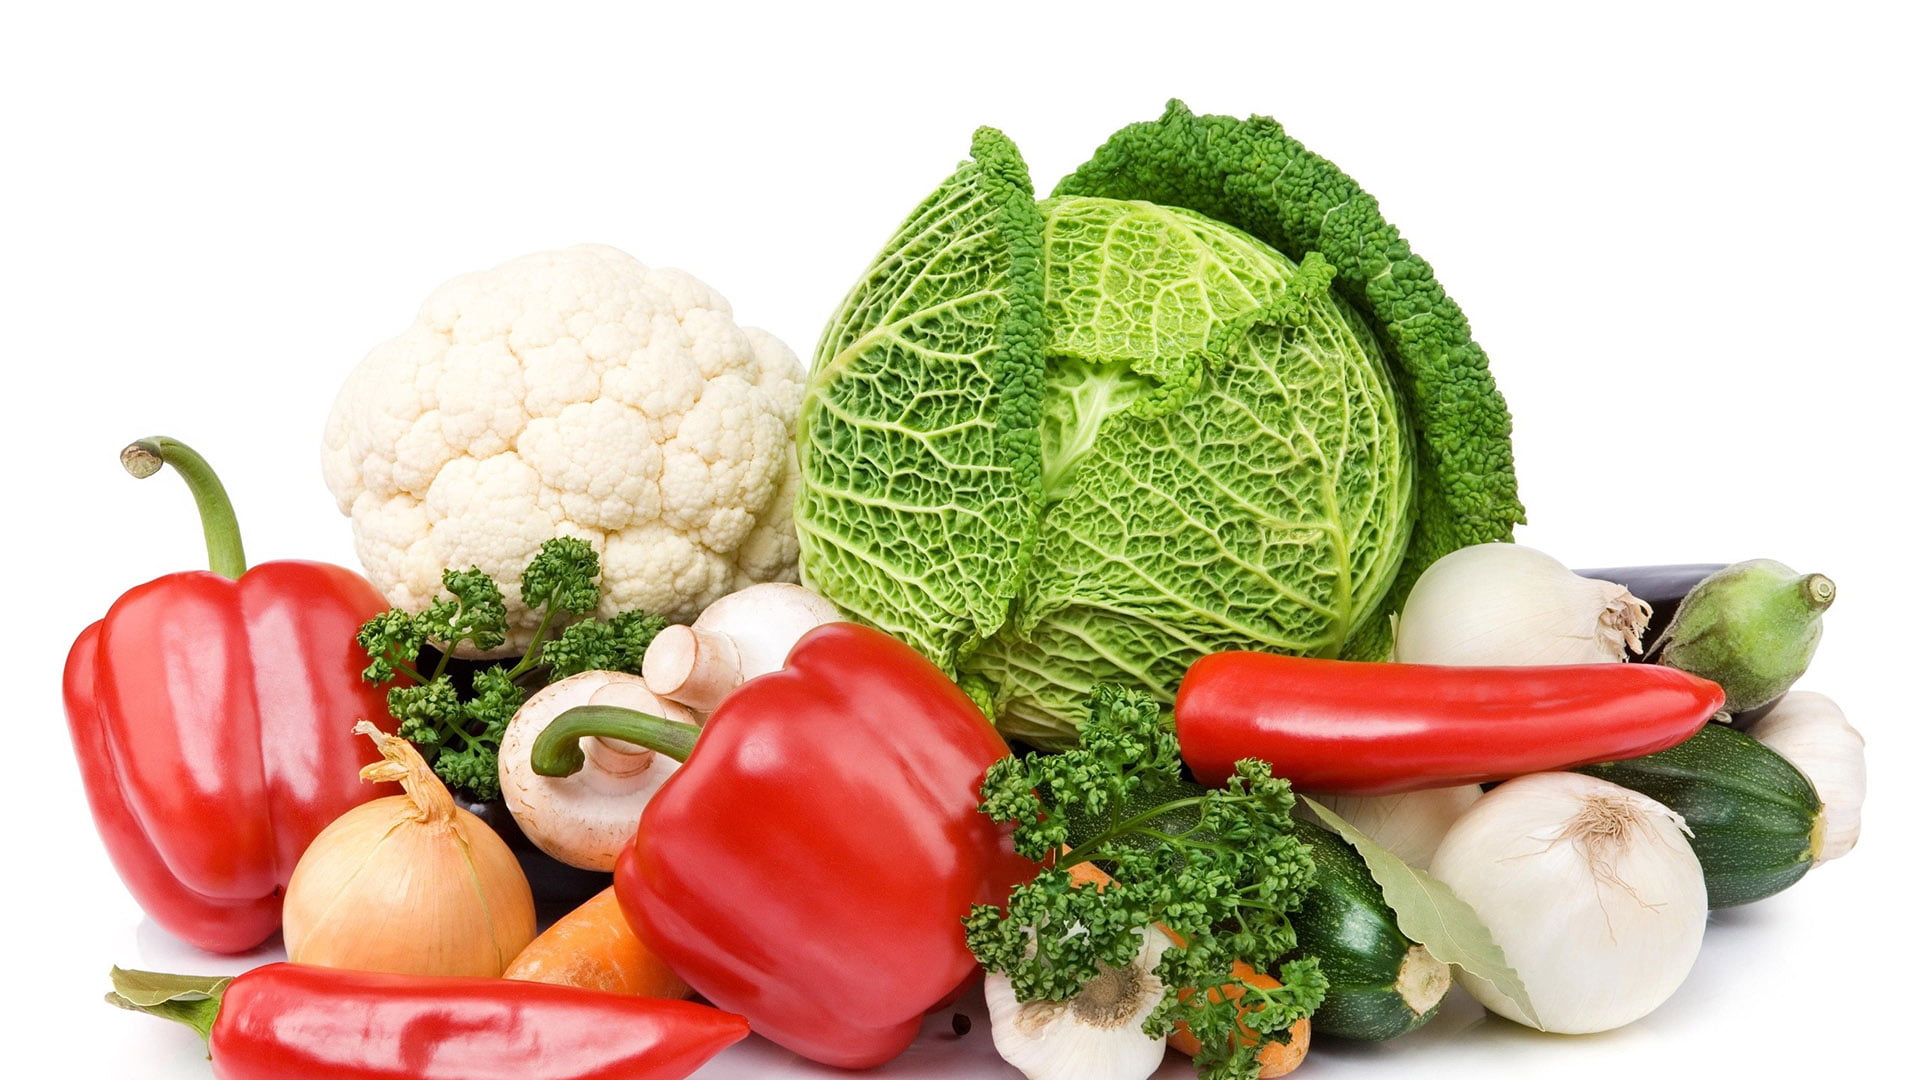 food, diet, vegetable, pepper, fresh, tomato, vegetables, healthy